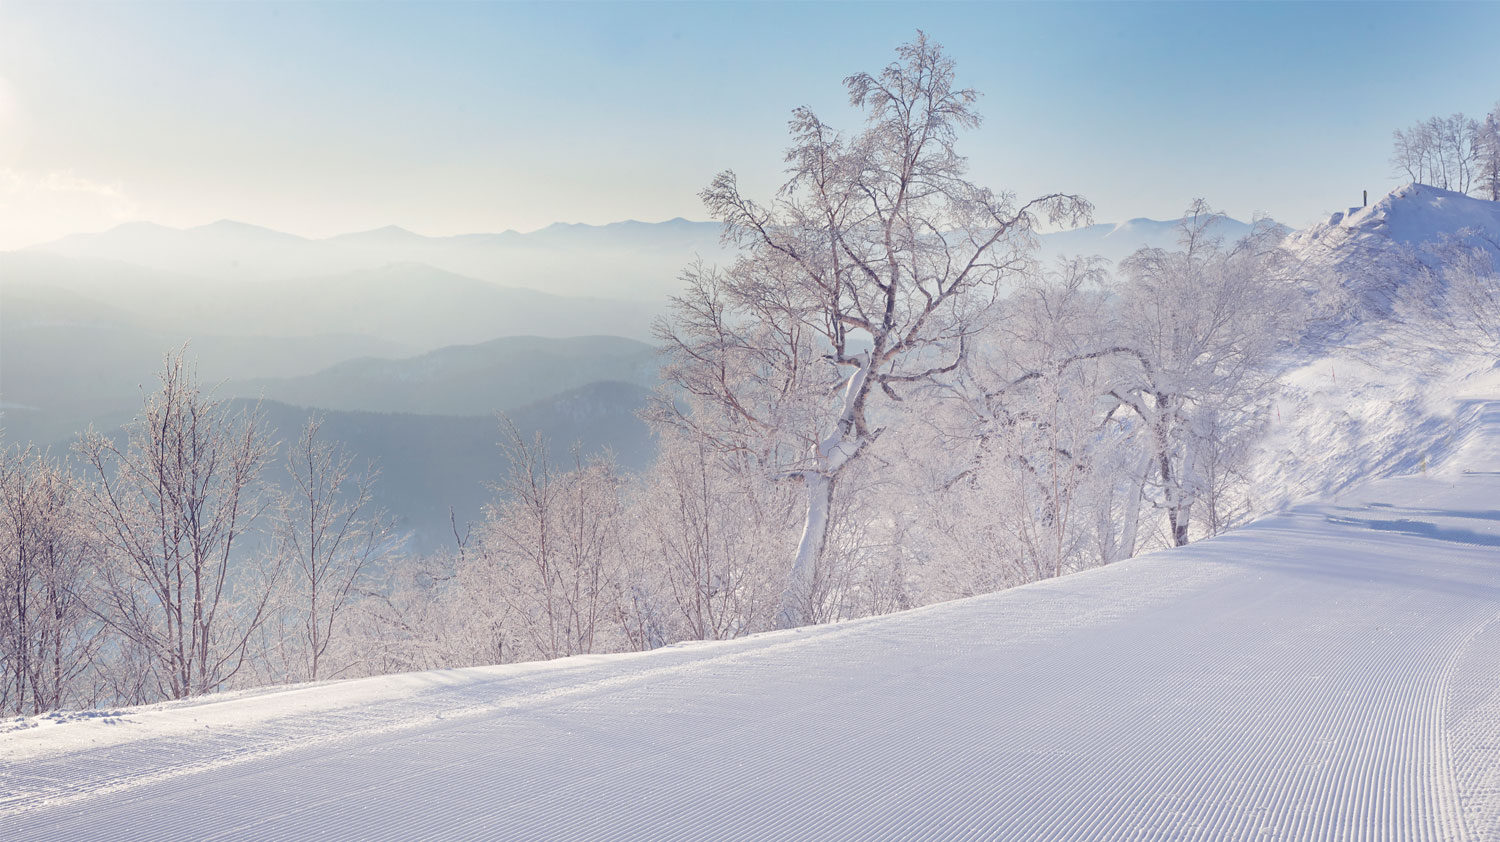 Tomamu, Japan's best family ski resort